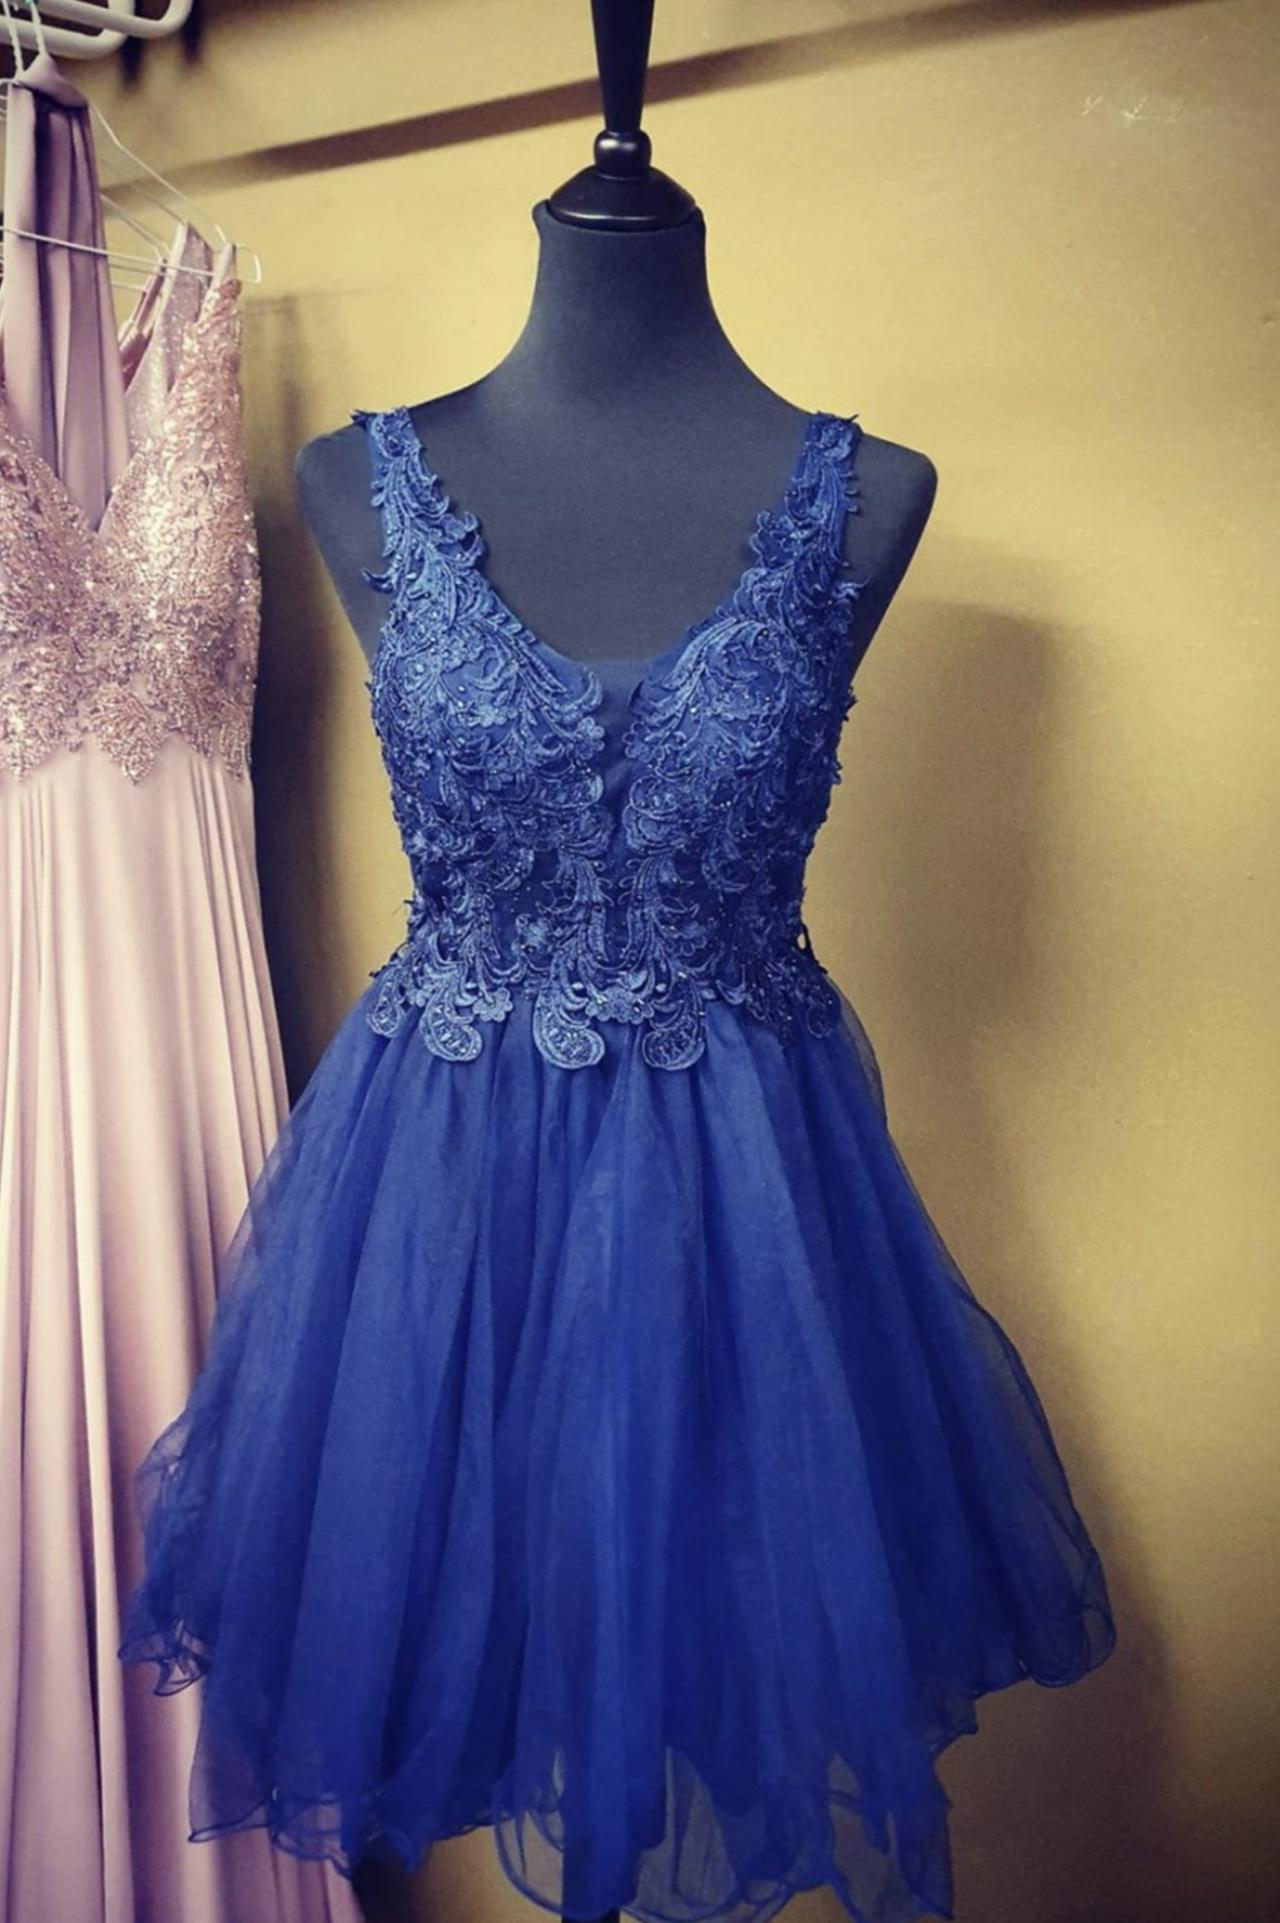 Blue Lace Short A Line Prom Dress Evening Dress